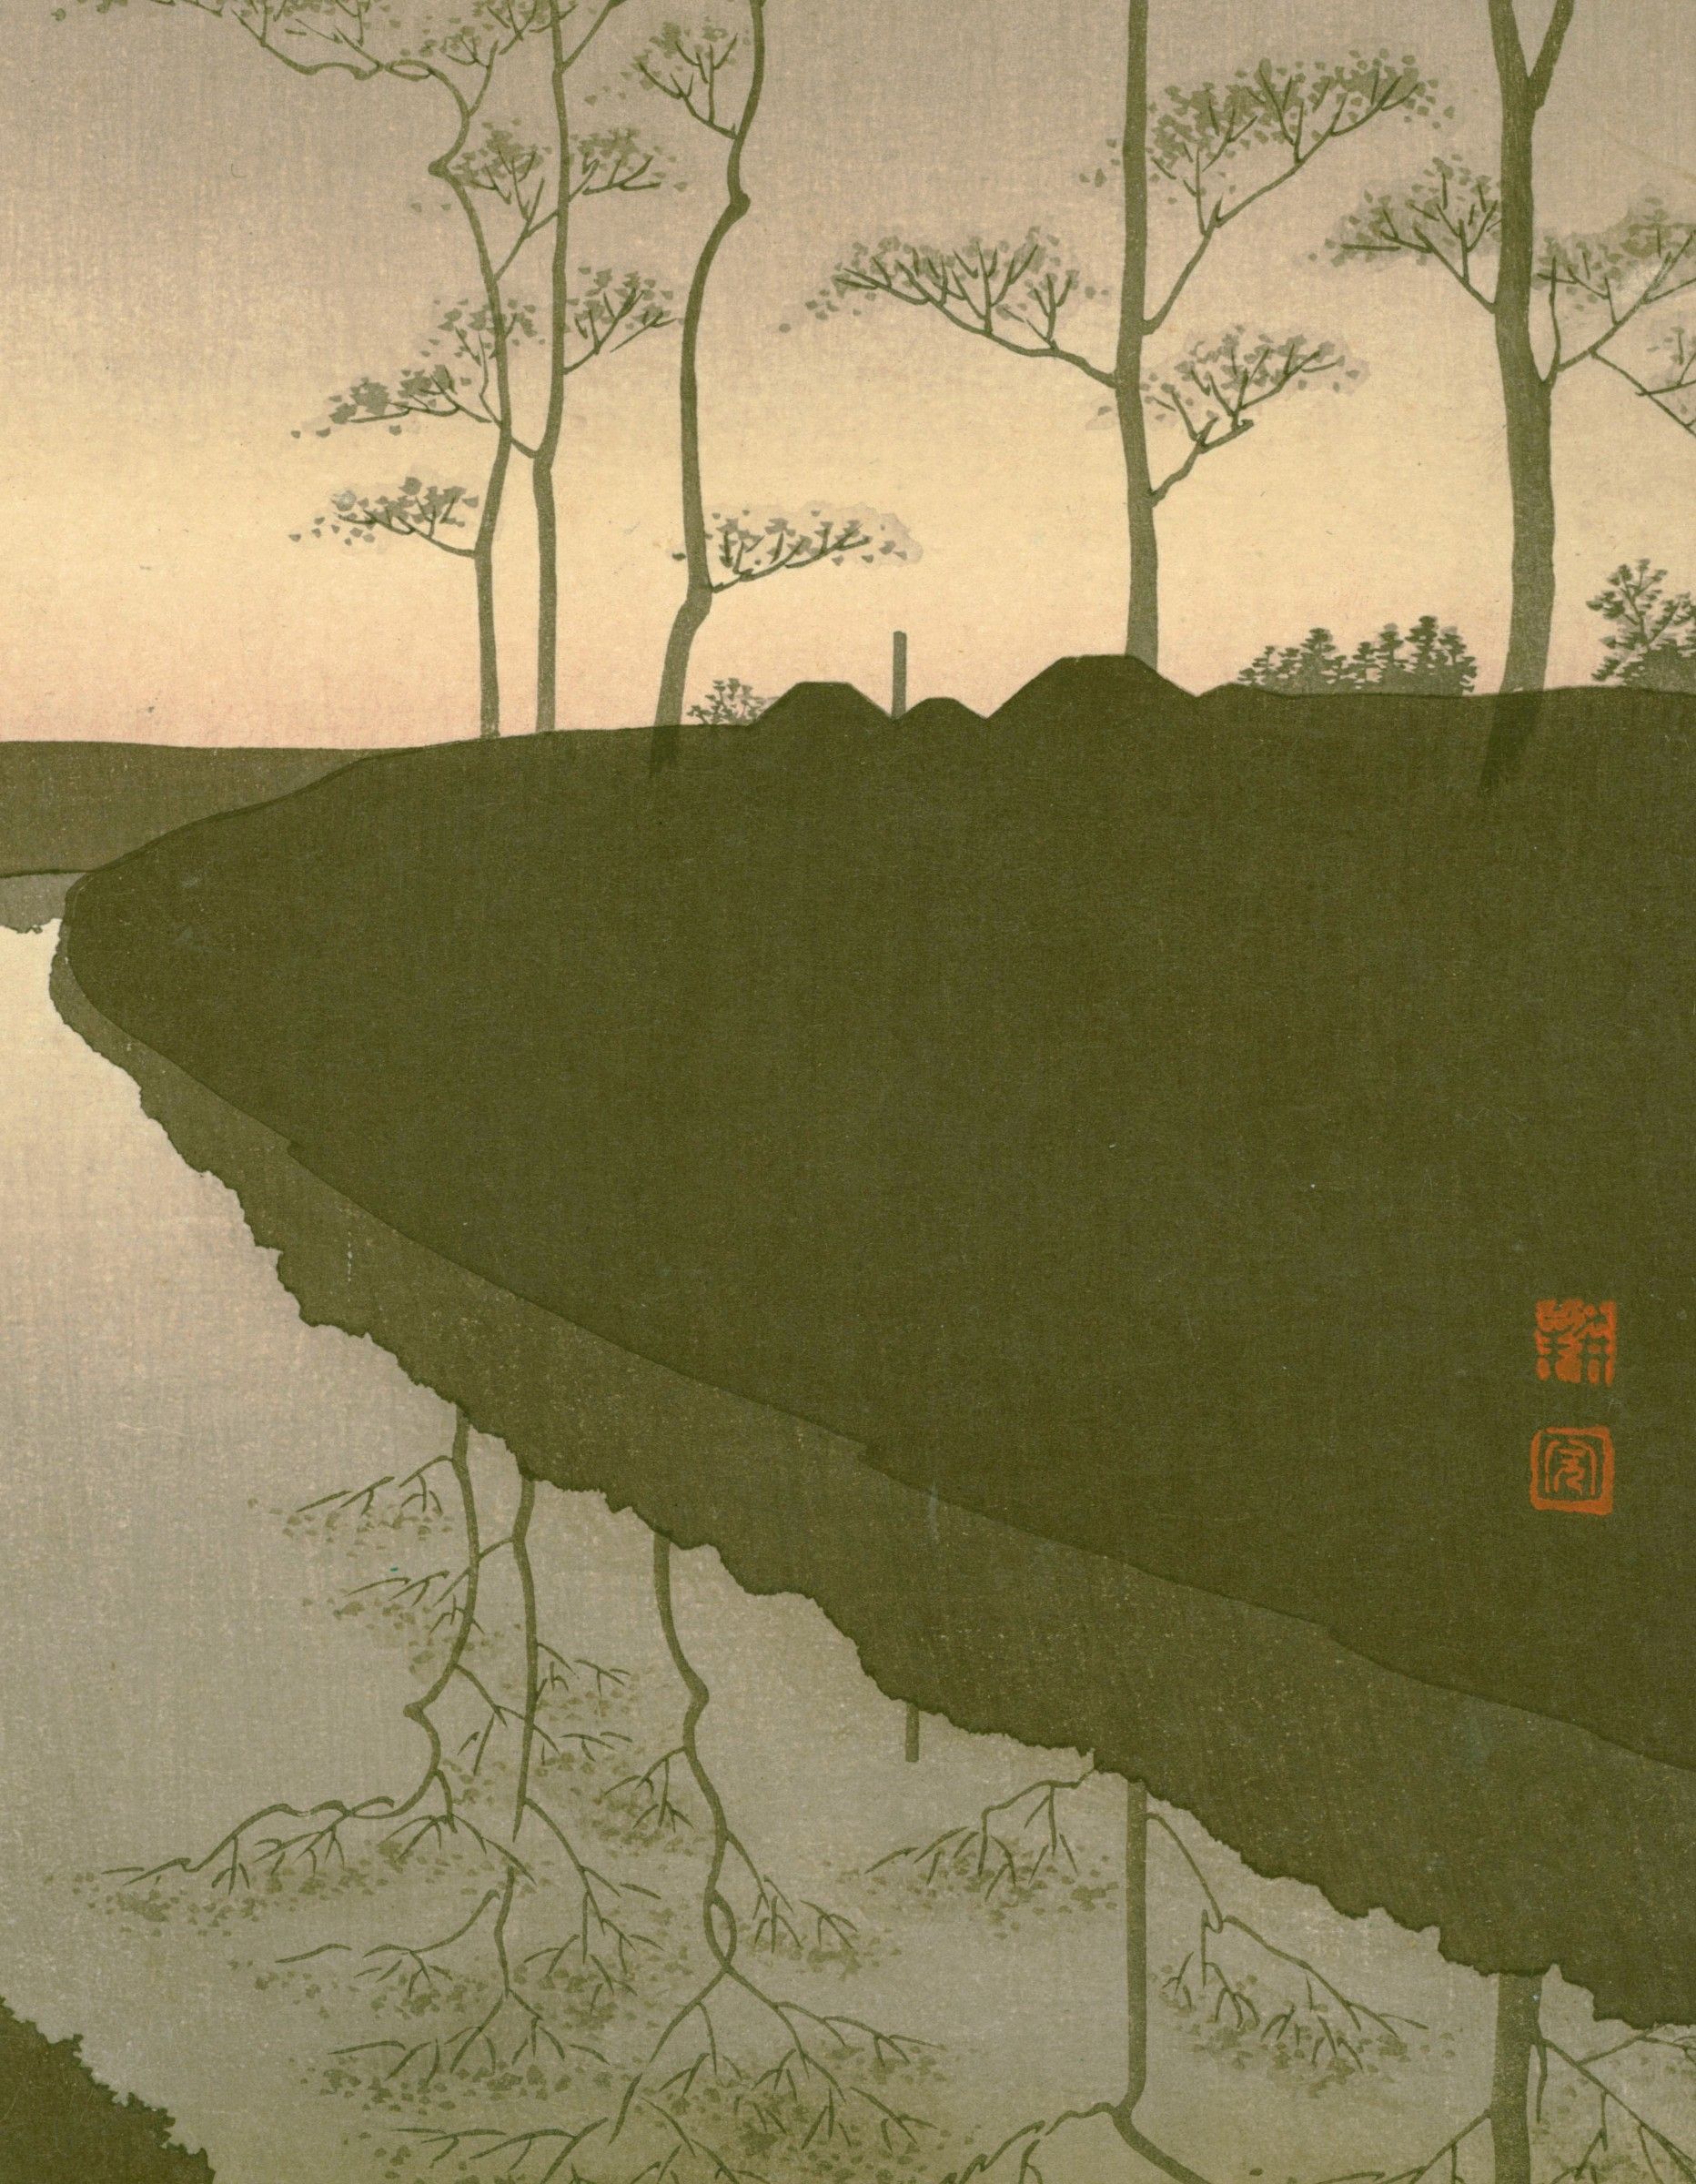 Shoda Koho Woodblock Print - Country Scene (Canal) Sepia - Hasegawa